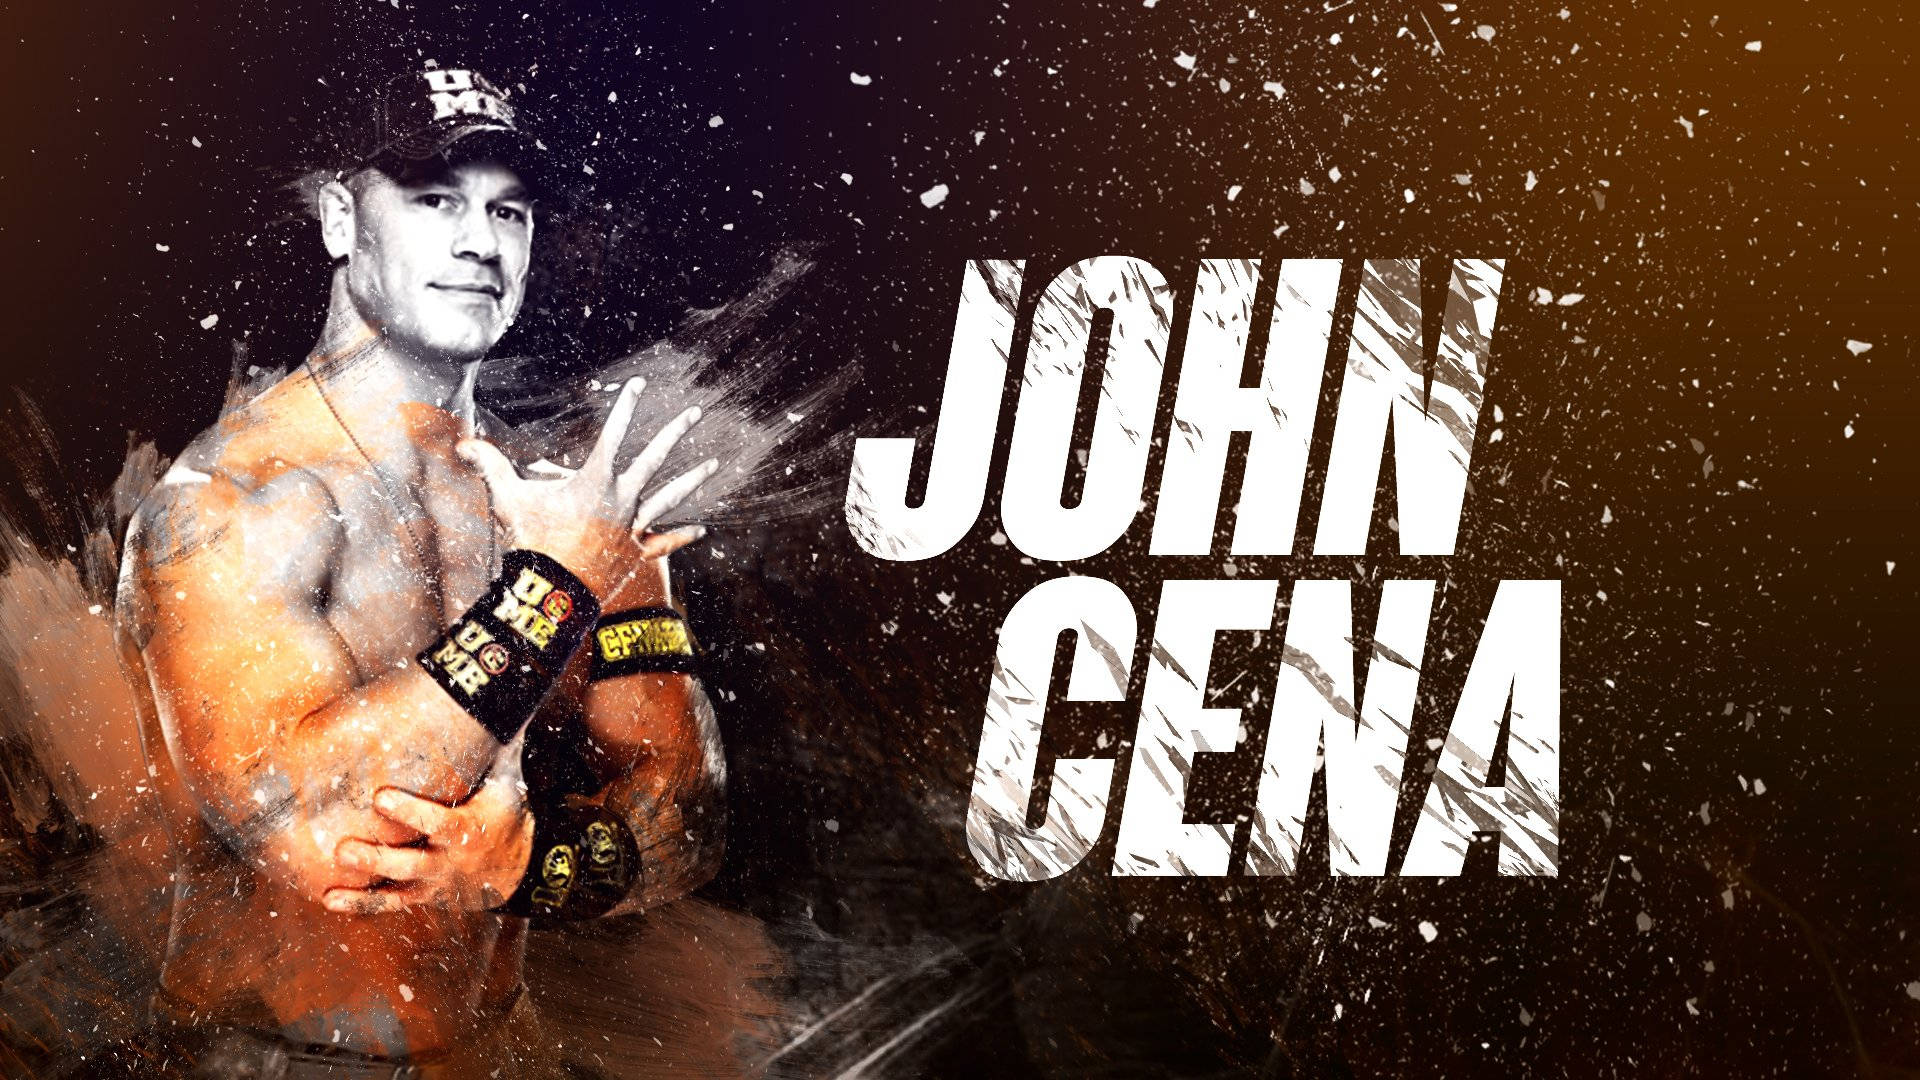 Wrestlemania 29 The Rock Vs John Cena Wallpaper by KCWallpapers on  DeviantArt